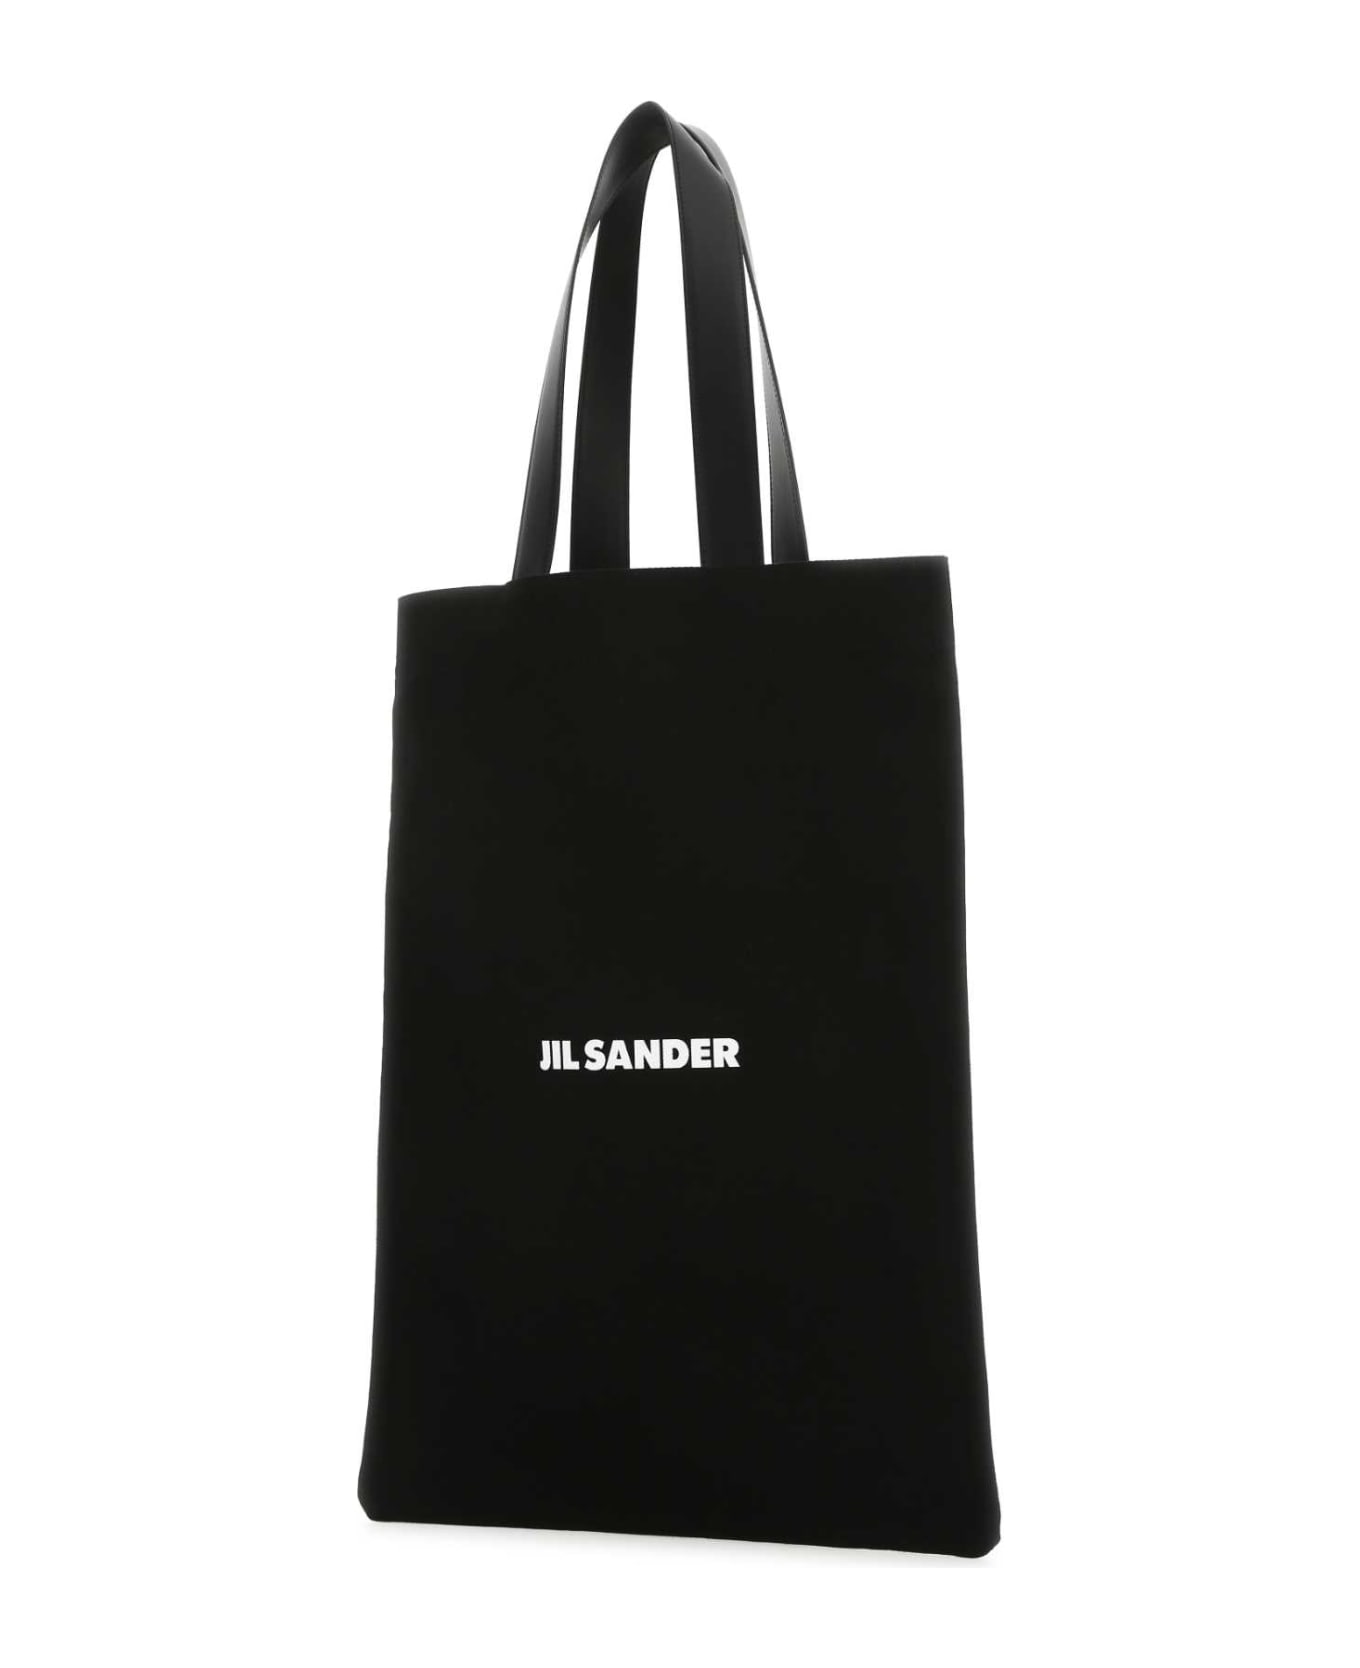 Jil Sander Black Canvas Shopping Bag - 001